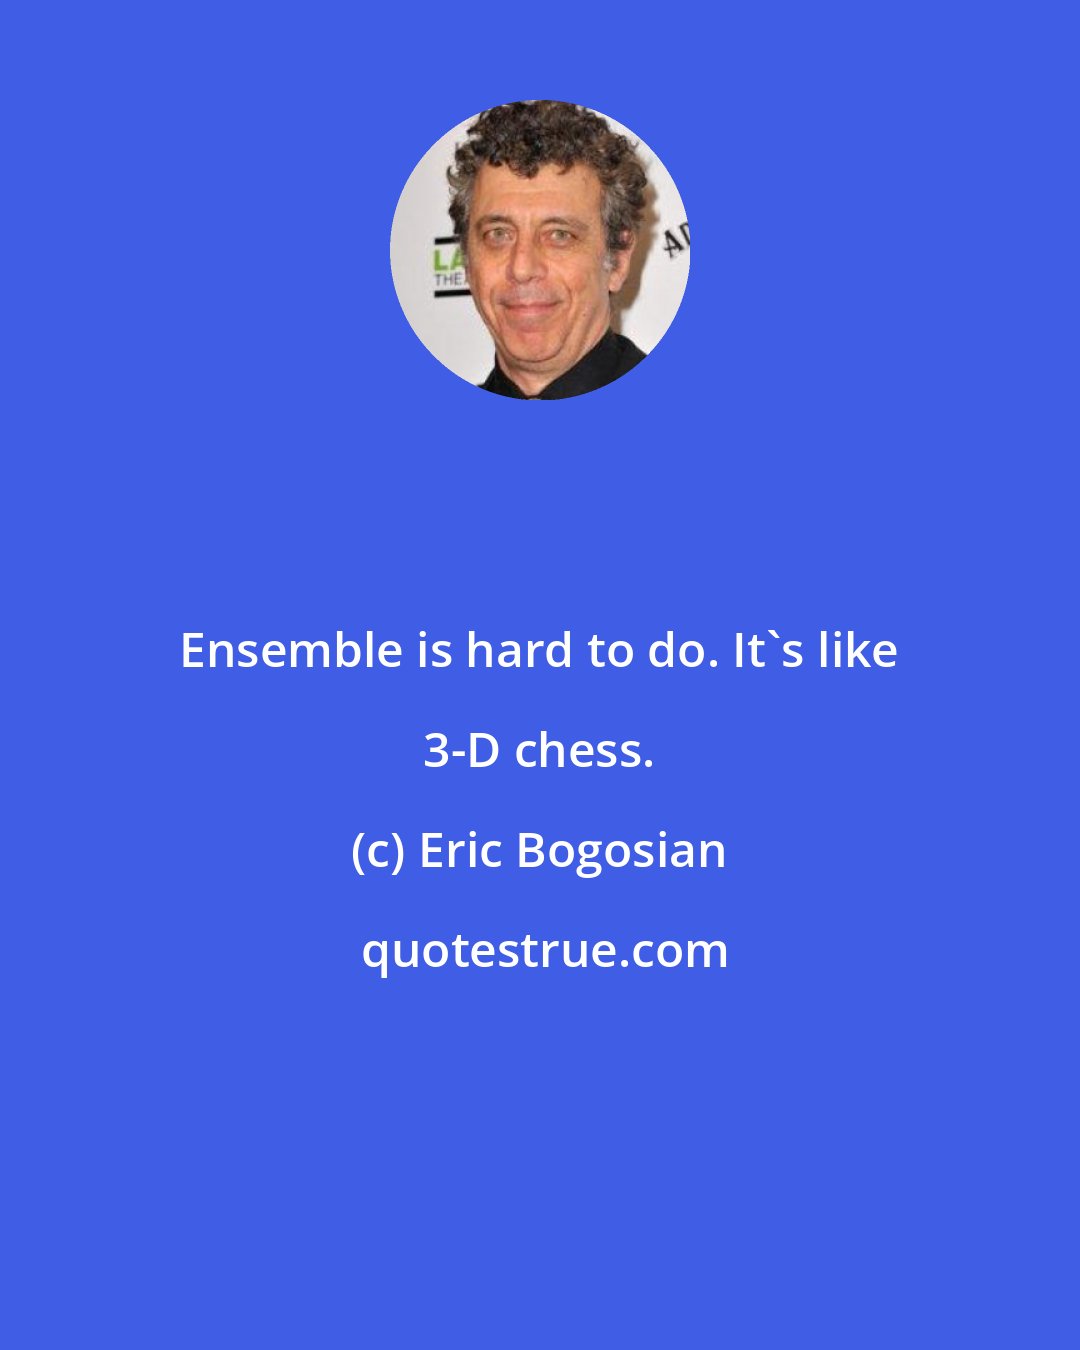 Eric Bogosian: Ensemble is hard to do. It's like 3-D chess.